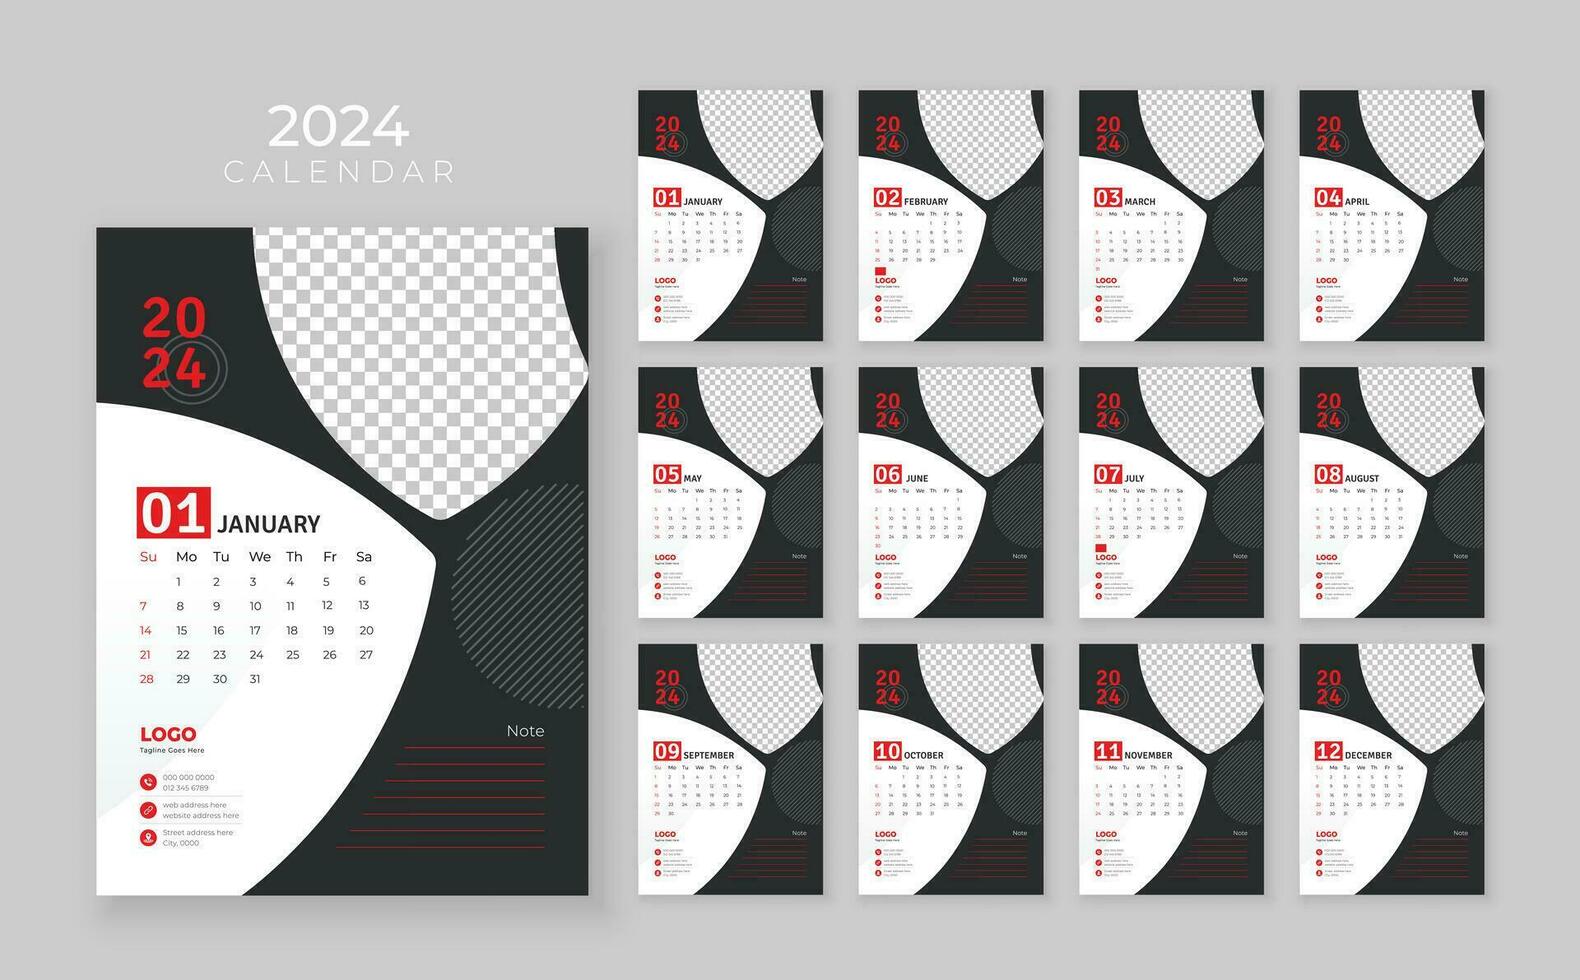 12 page wall calendar 2024, Company Calendar template, Week start Sunday, Wall calendar in a minimalist style vector